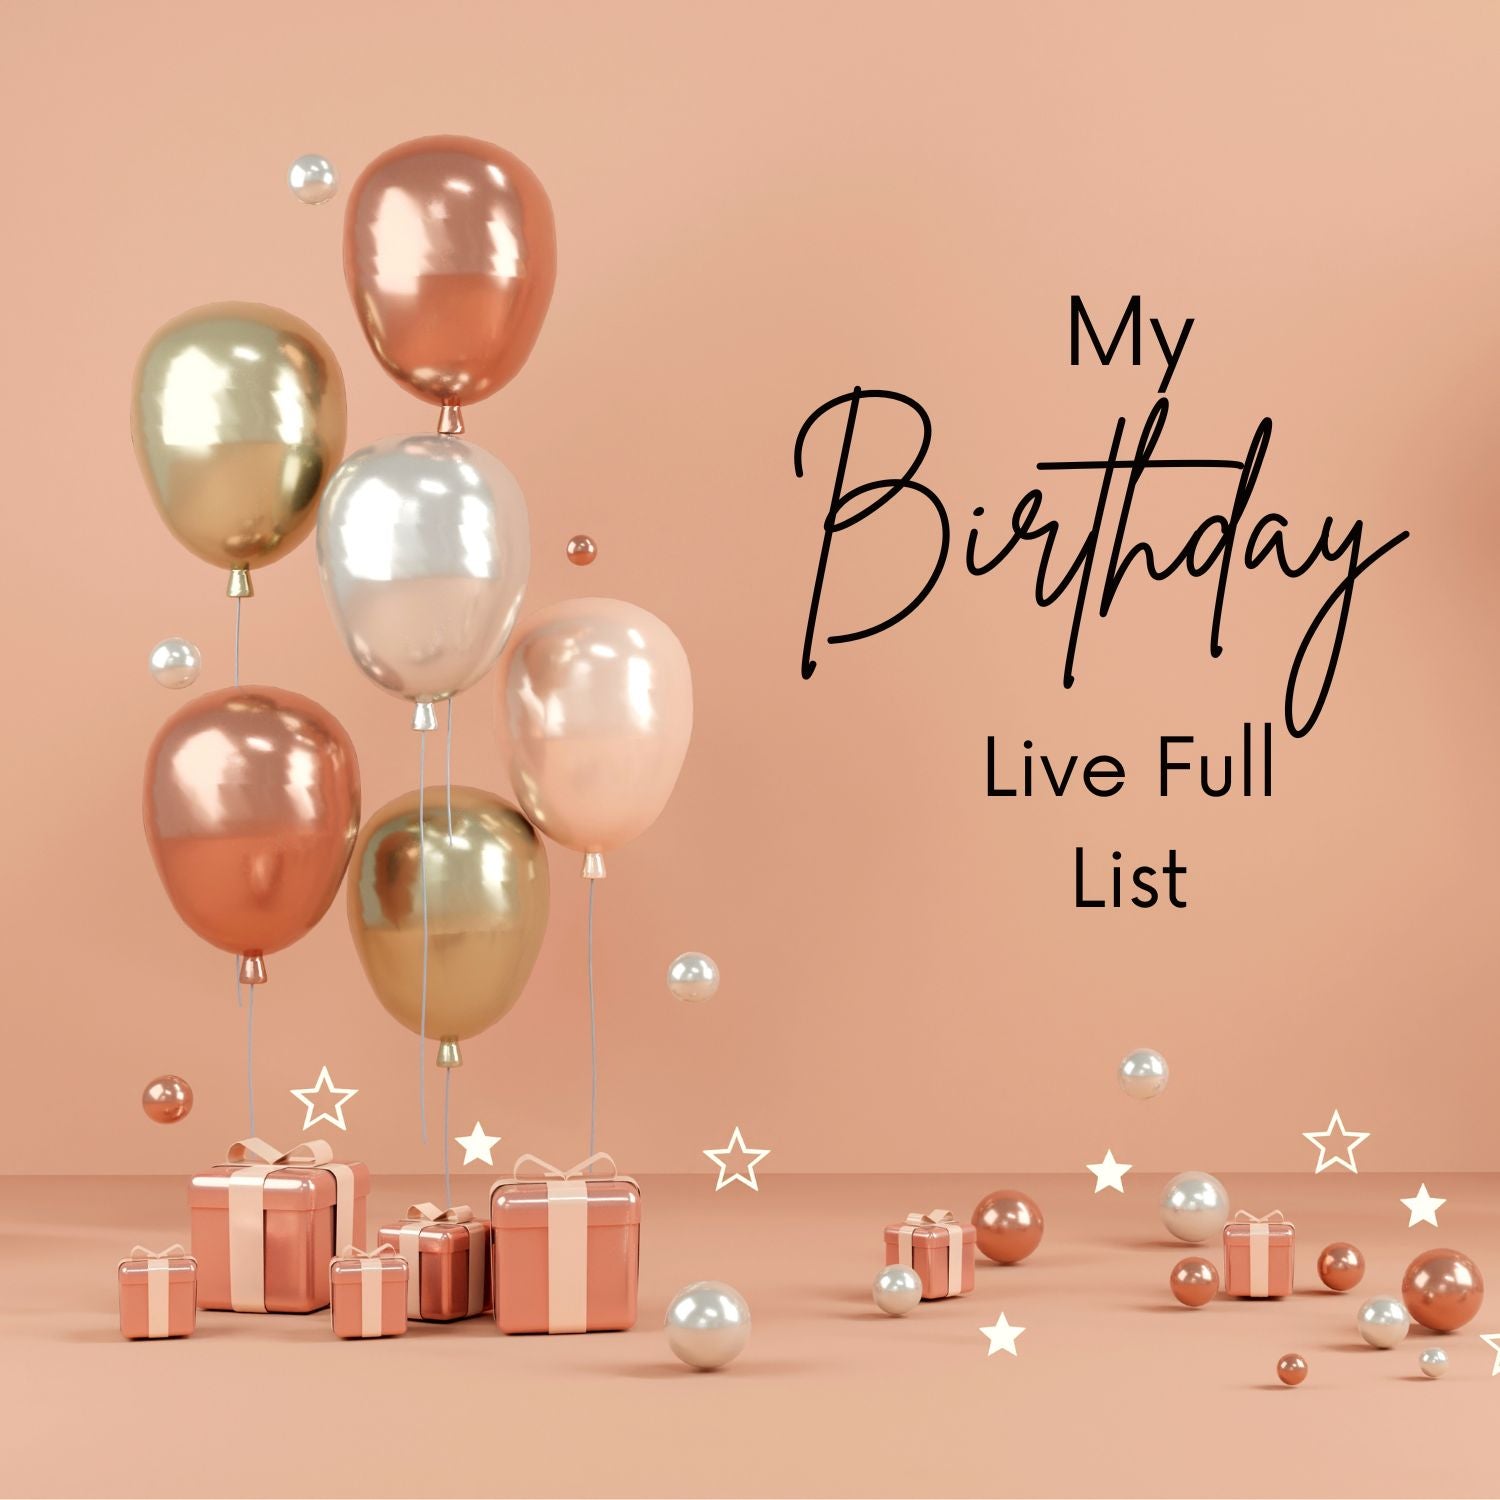 My Birthday Live Full List